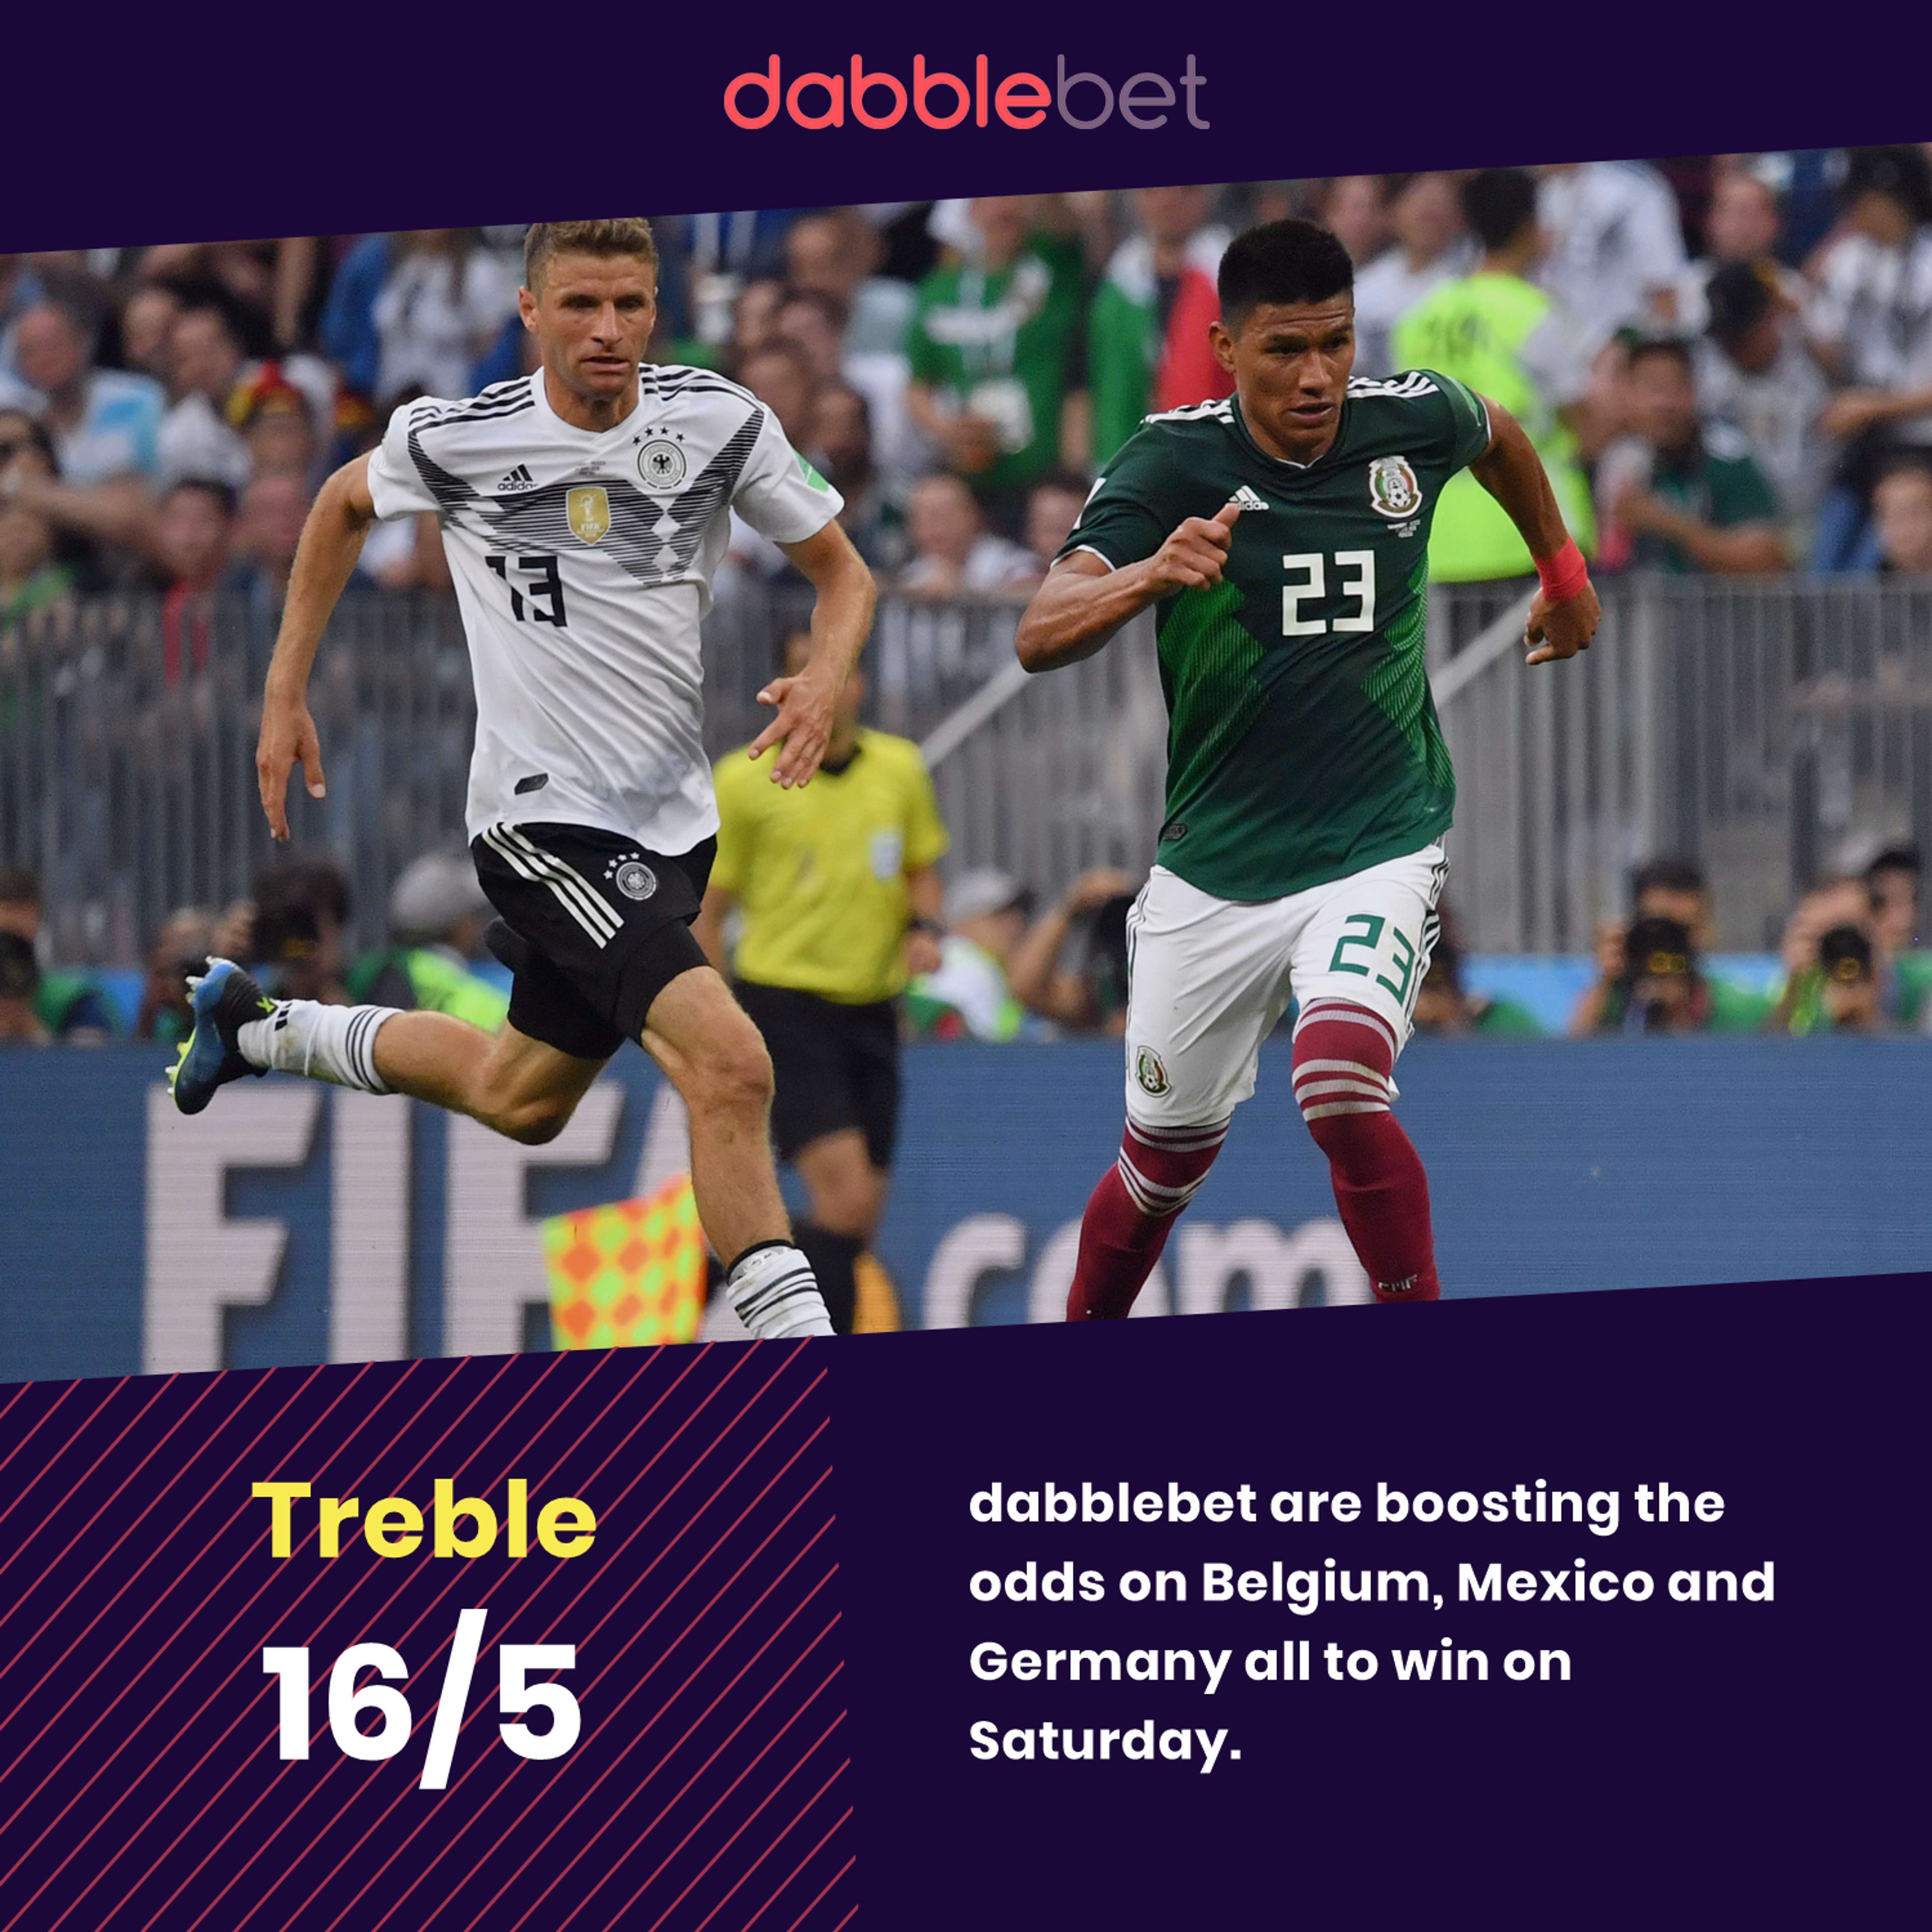 World Cup dabblebet treble